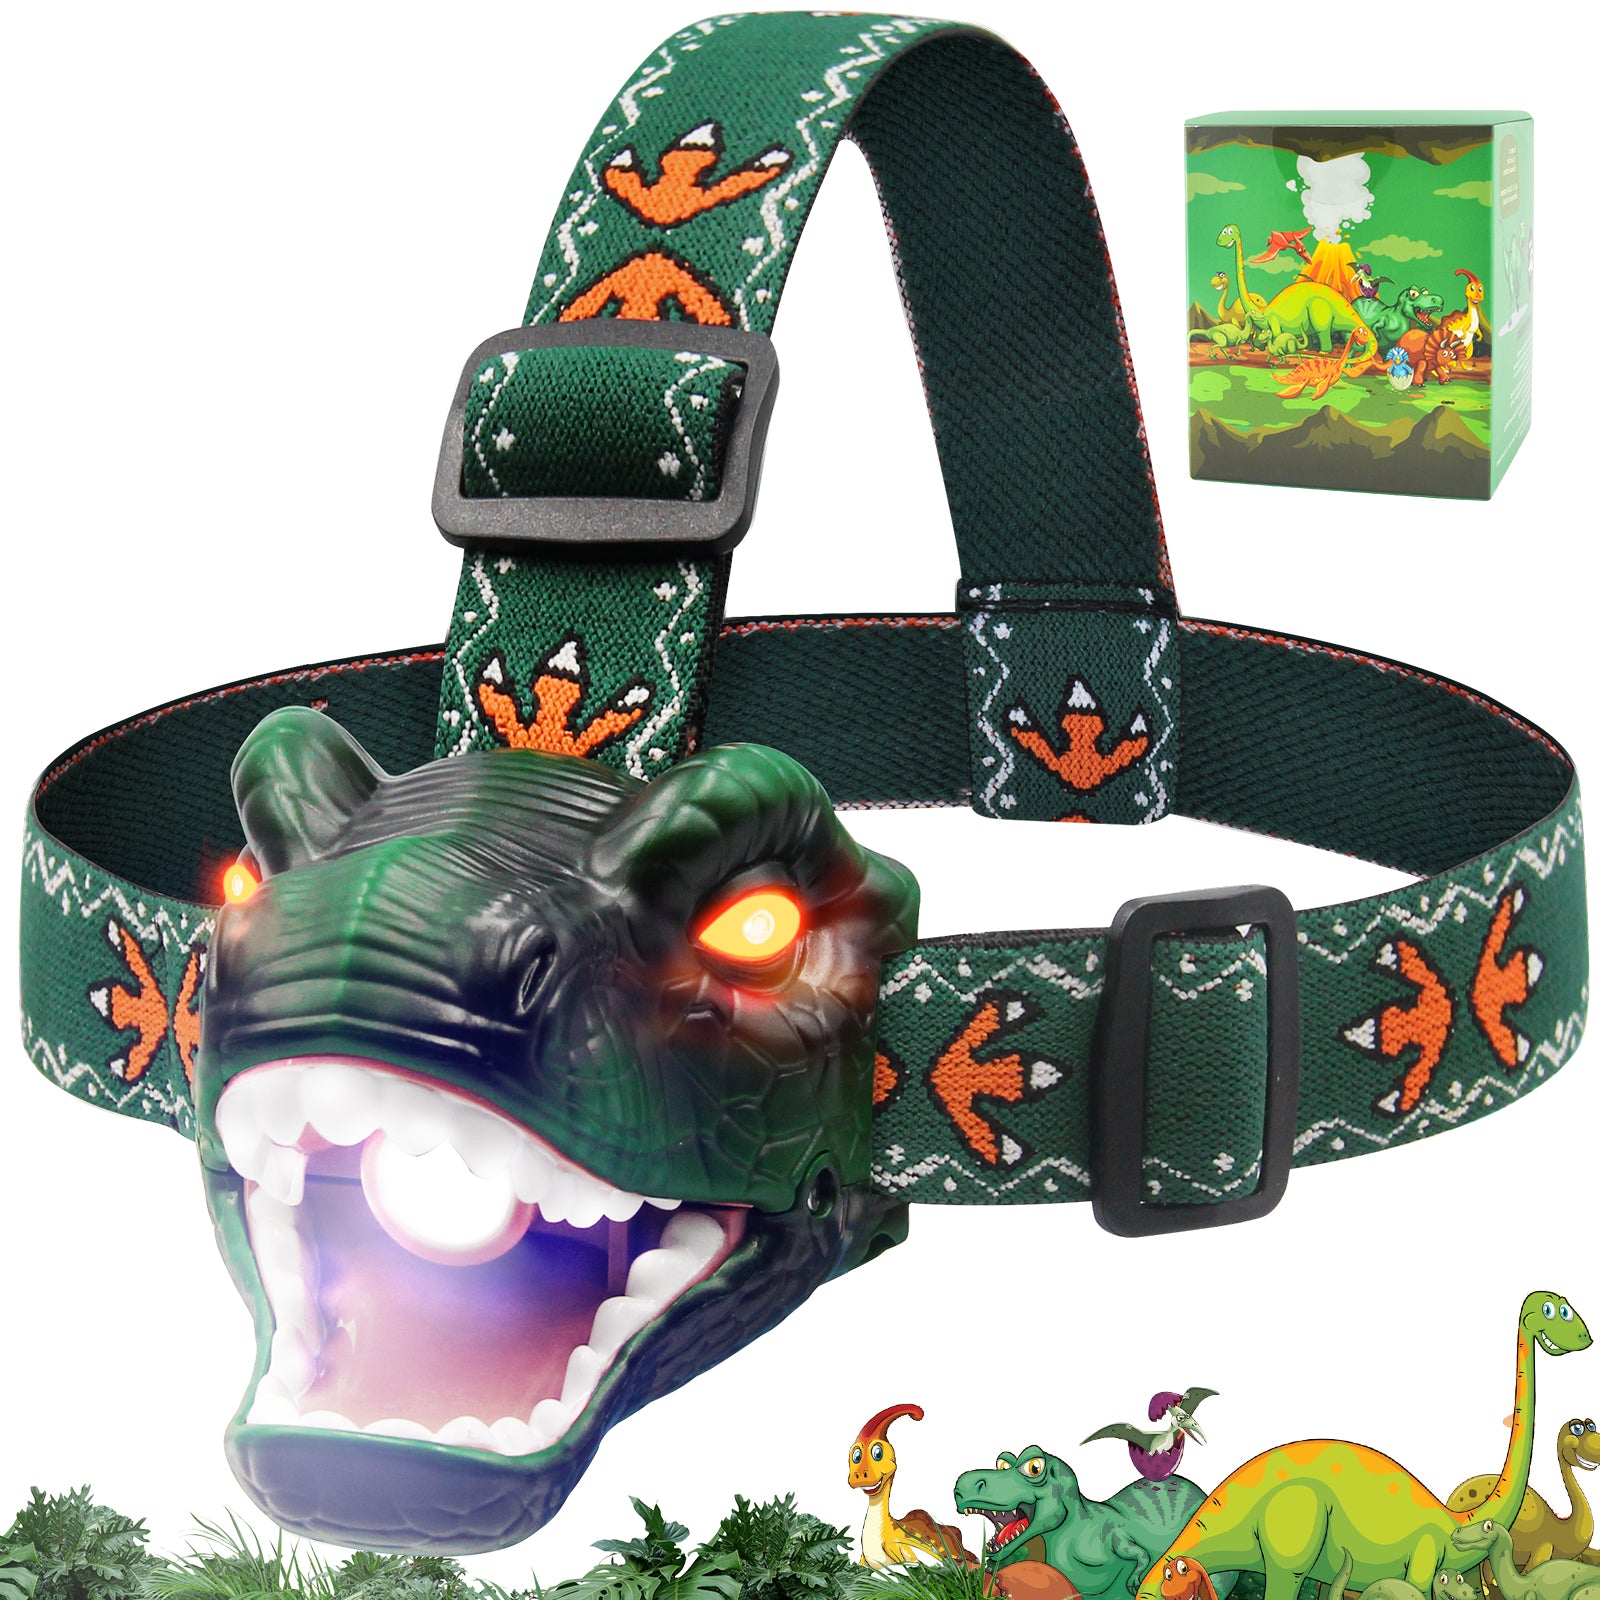 Kids Headlamp, T-Rex Dinosaur Headlamp for Kids with 3 Light Modes, Simulate Dino Roar, Adjustable Headband